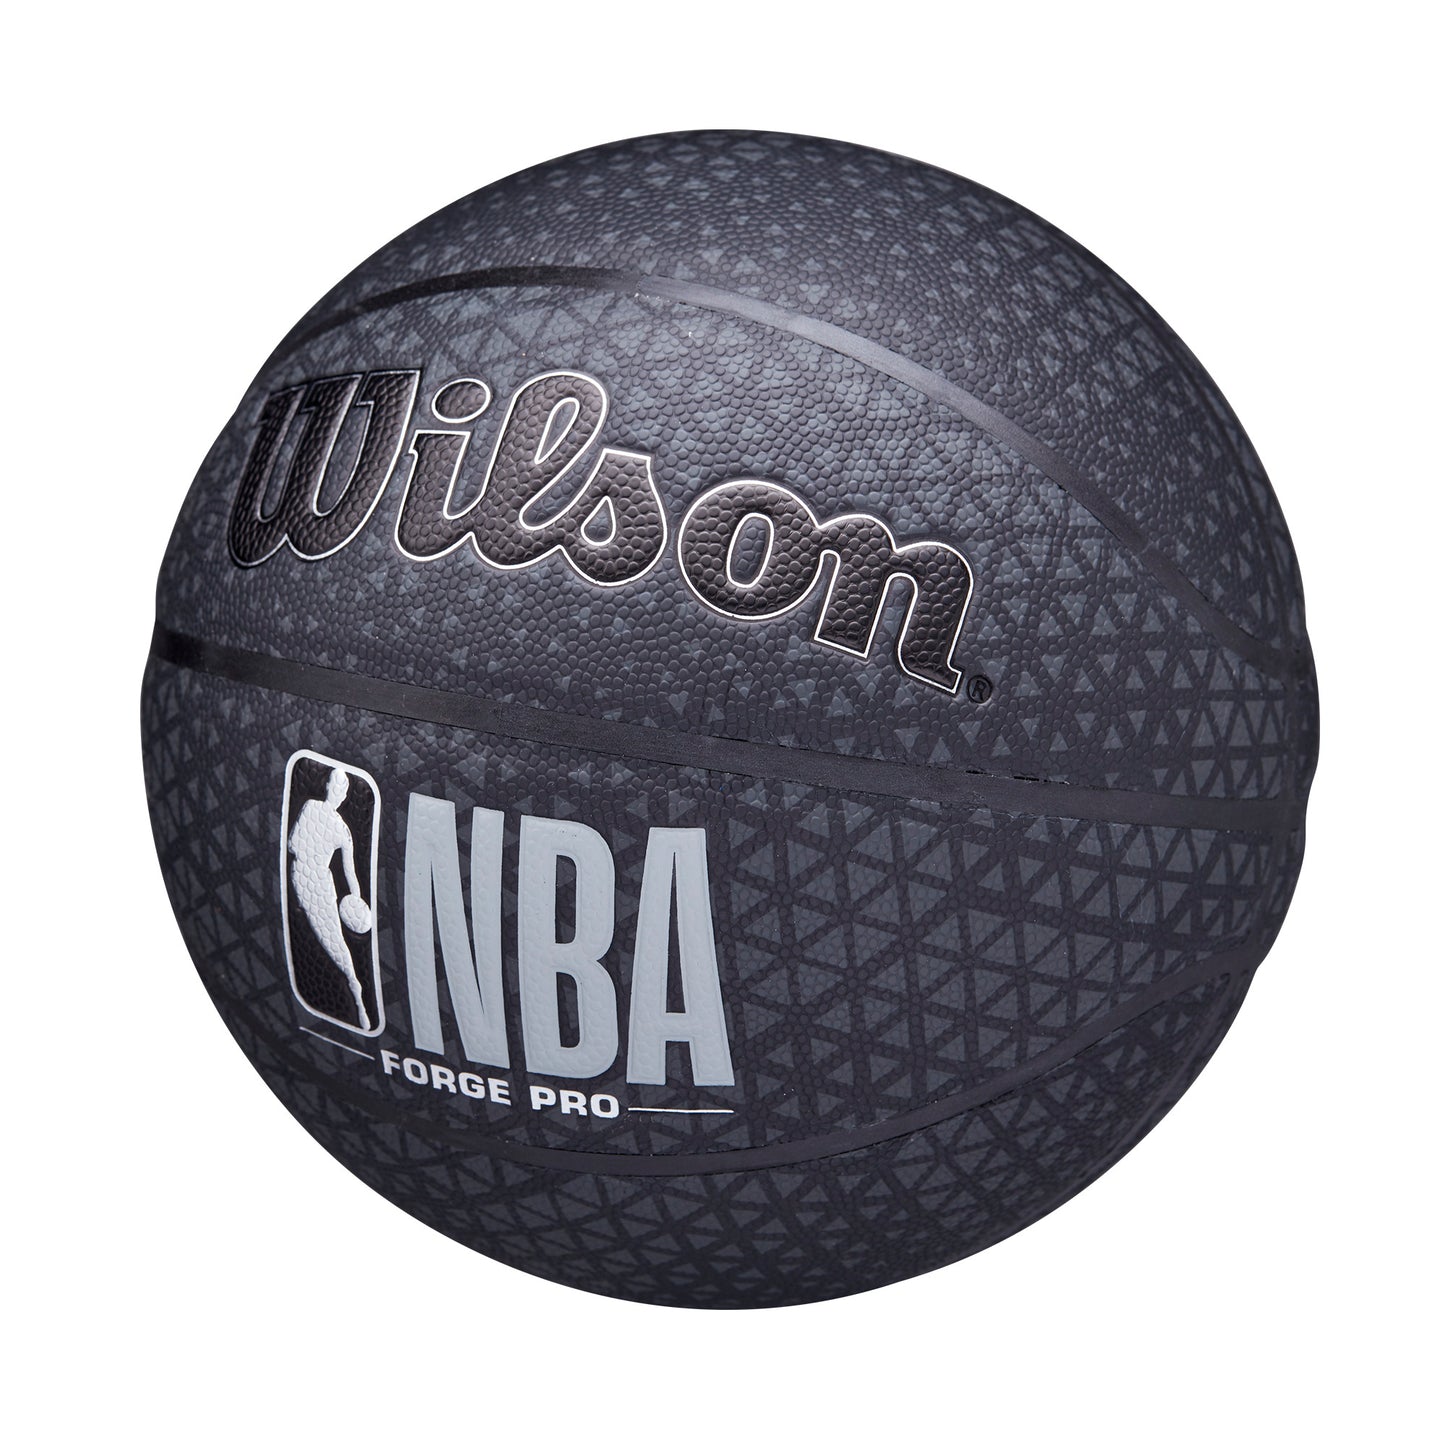 Wilson NBA FORGE PRO PRINTED BASKETBALL Black WTB8001XB